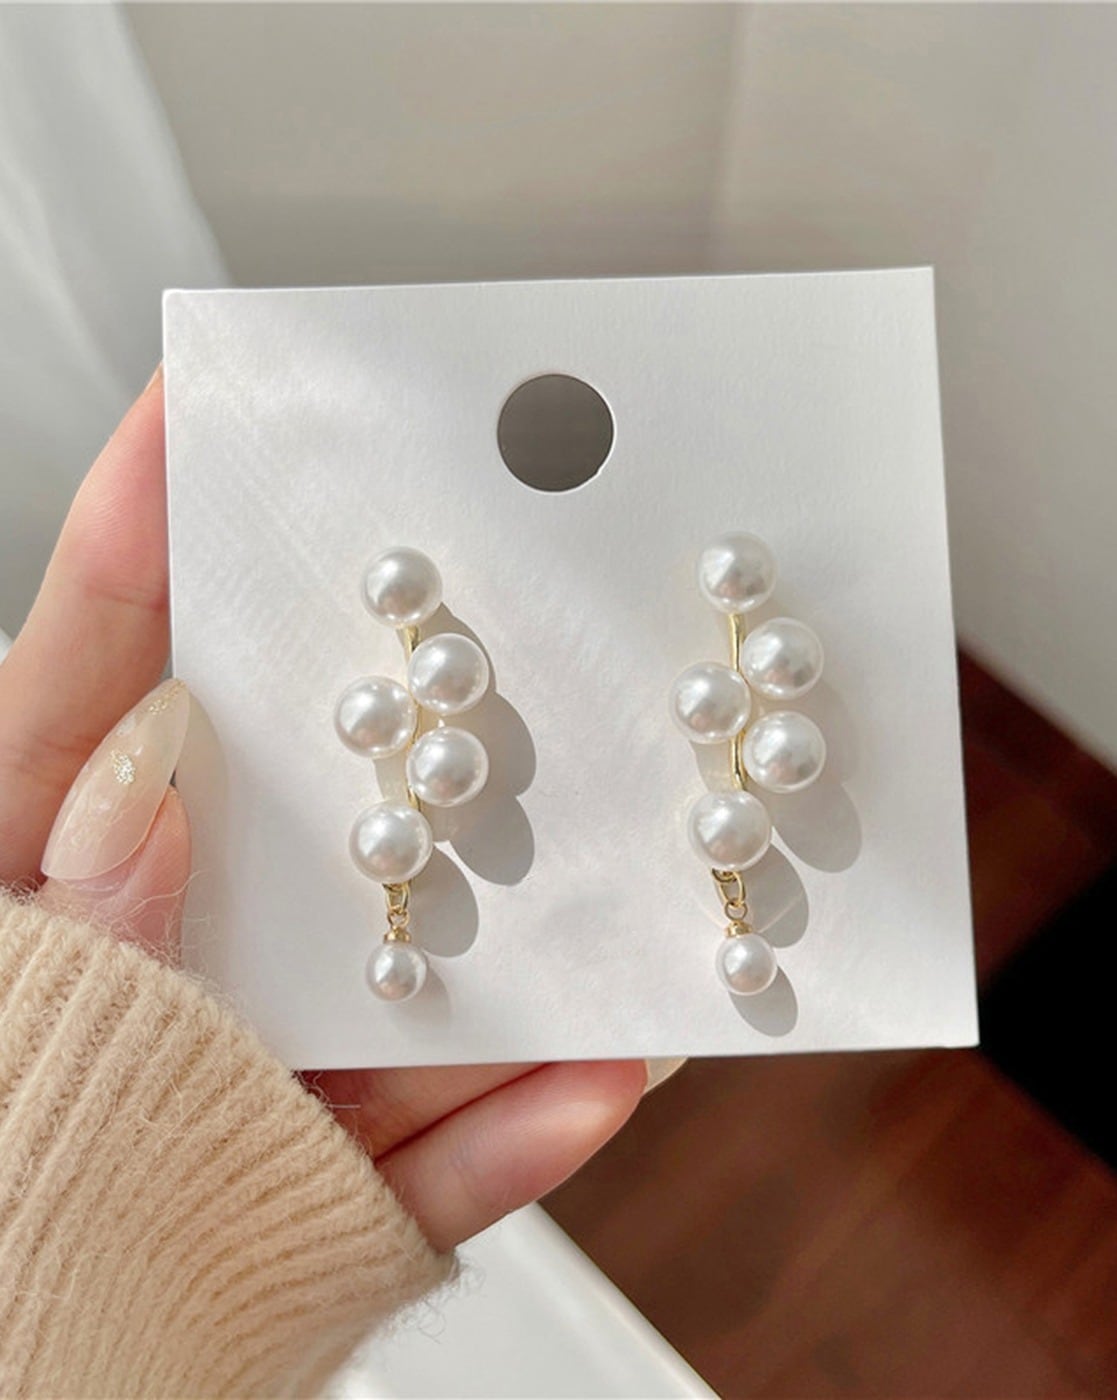 White Pearl Tops Earrings with Floral Design and Enamel Work - Daffodil  Enamel Floral Stud Earrings by Blingvine